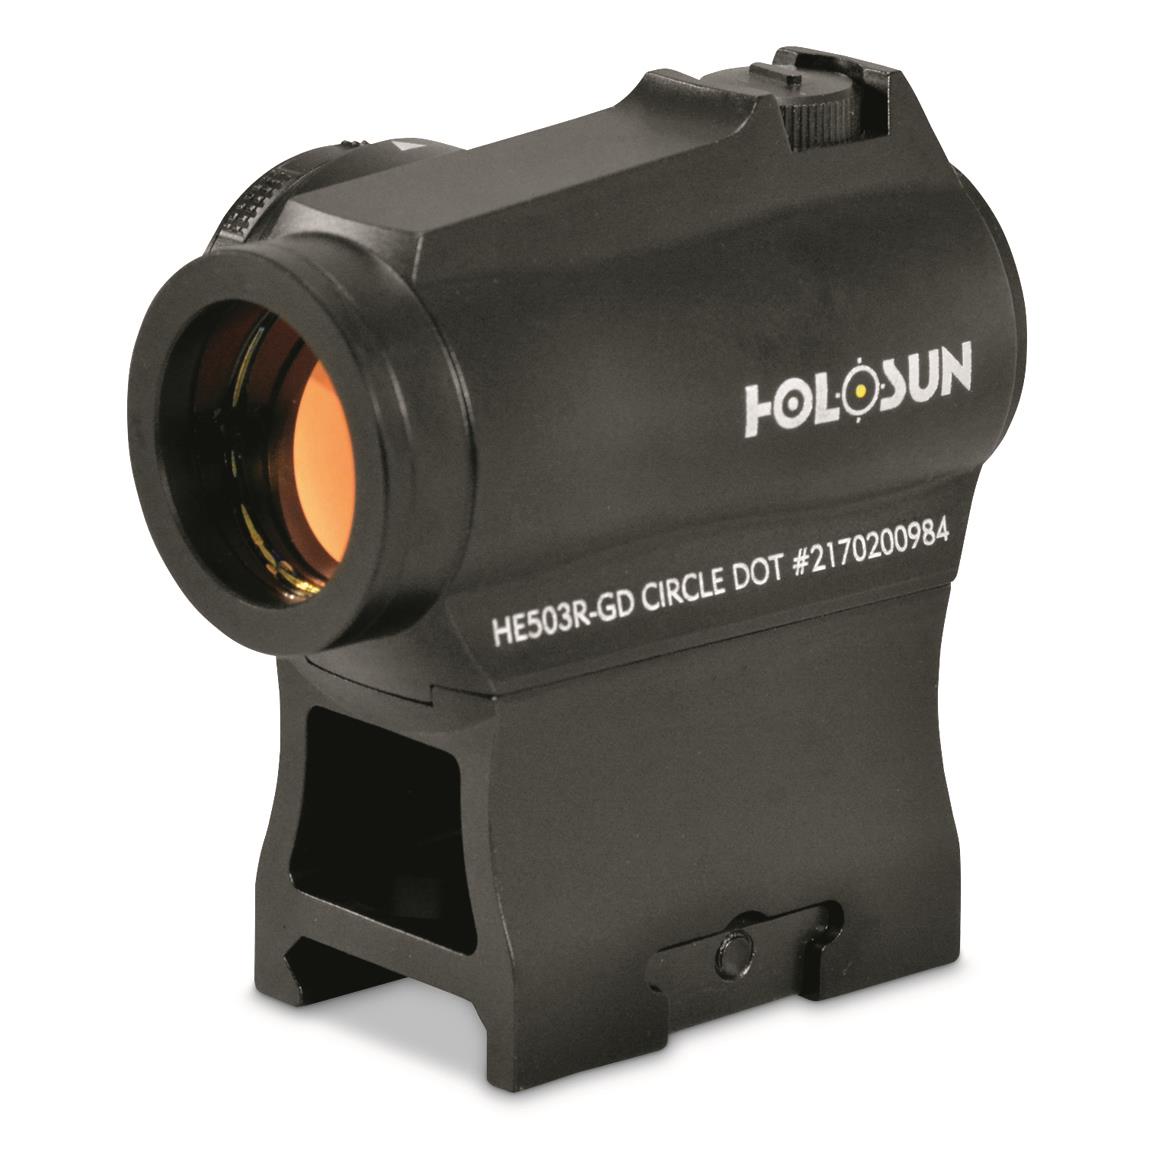 Holosun HE503R-GD Open Reflex Sight, Gold Reticle